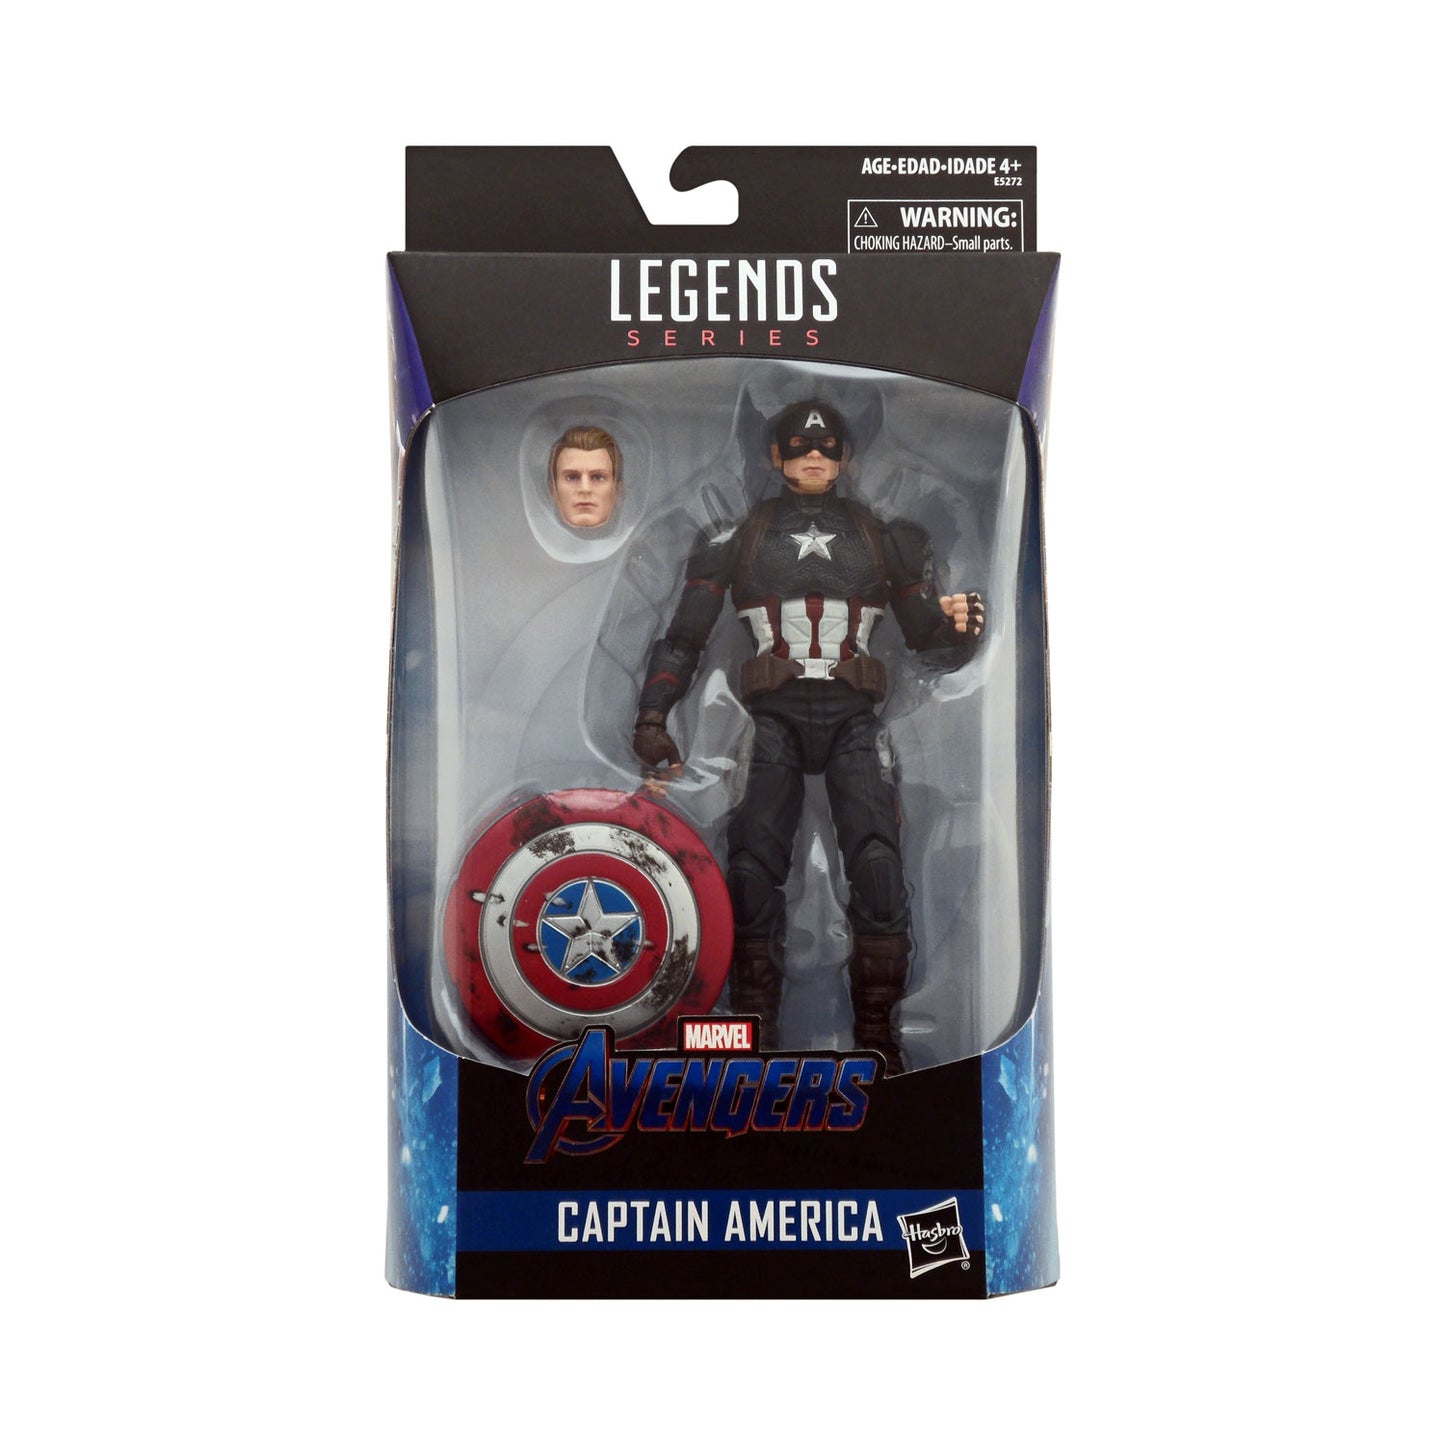 Marvel Legends Avengers: Endgame "Worthy" Captain America Exclusive